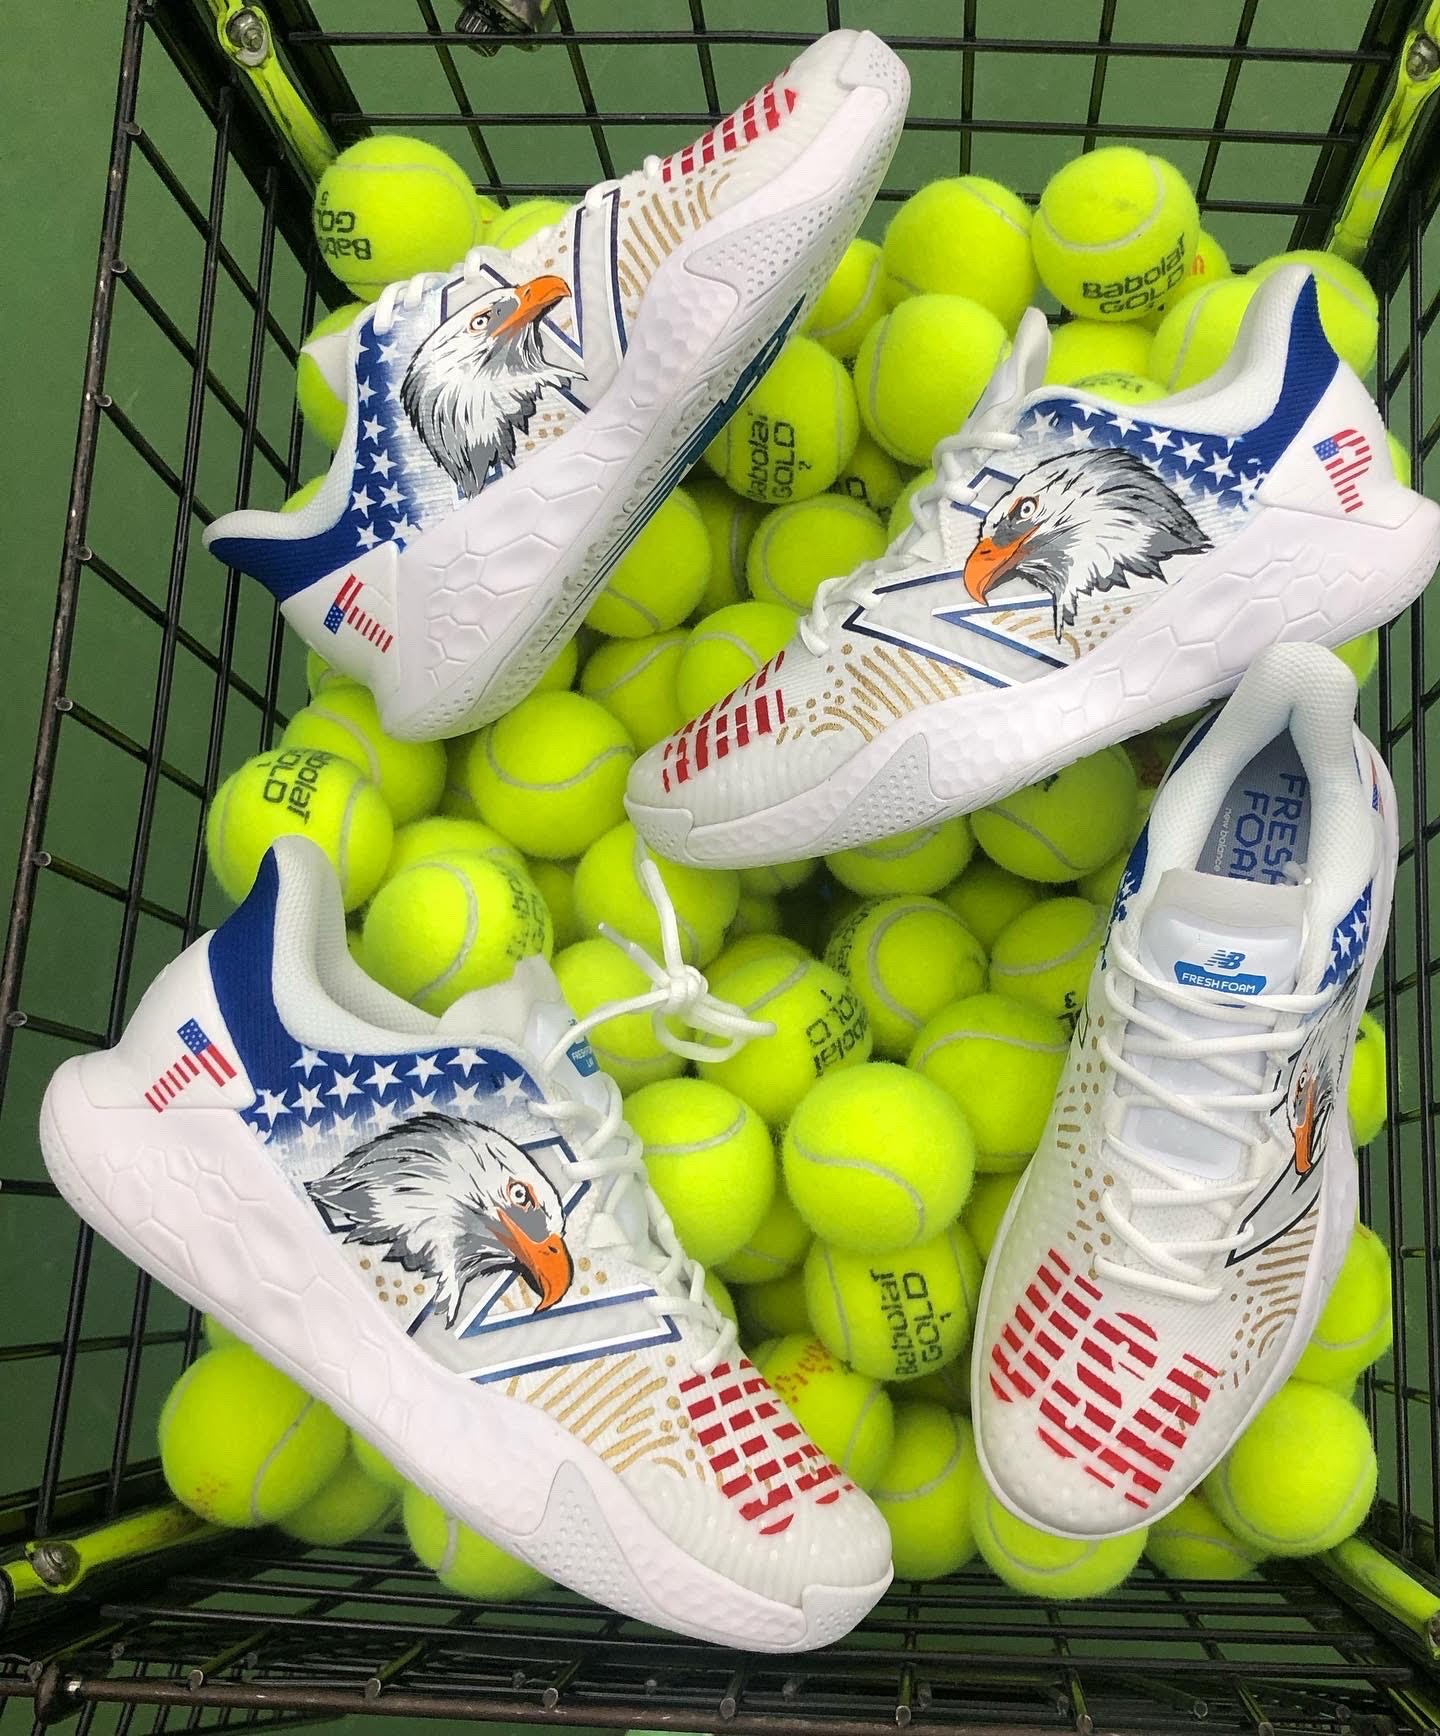 TP Davis Cup shoe pic.jpg